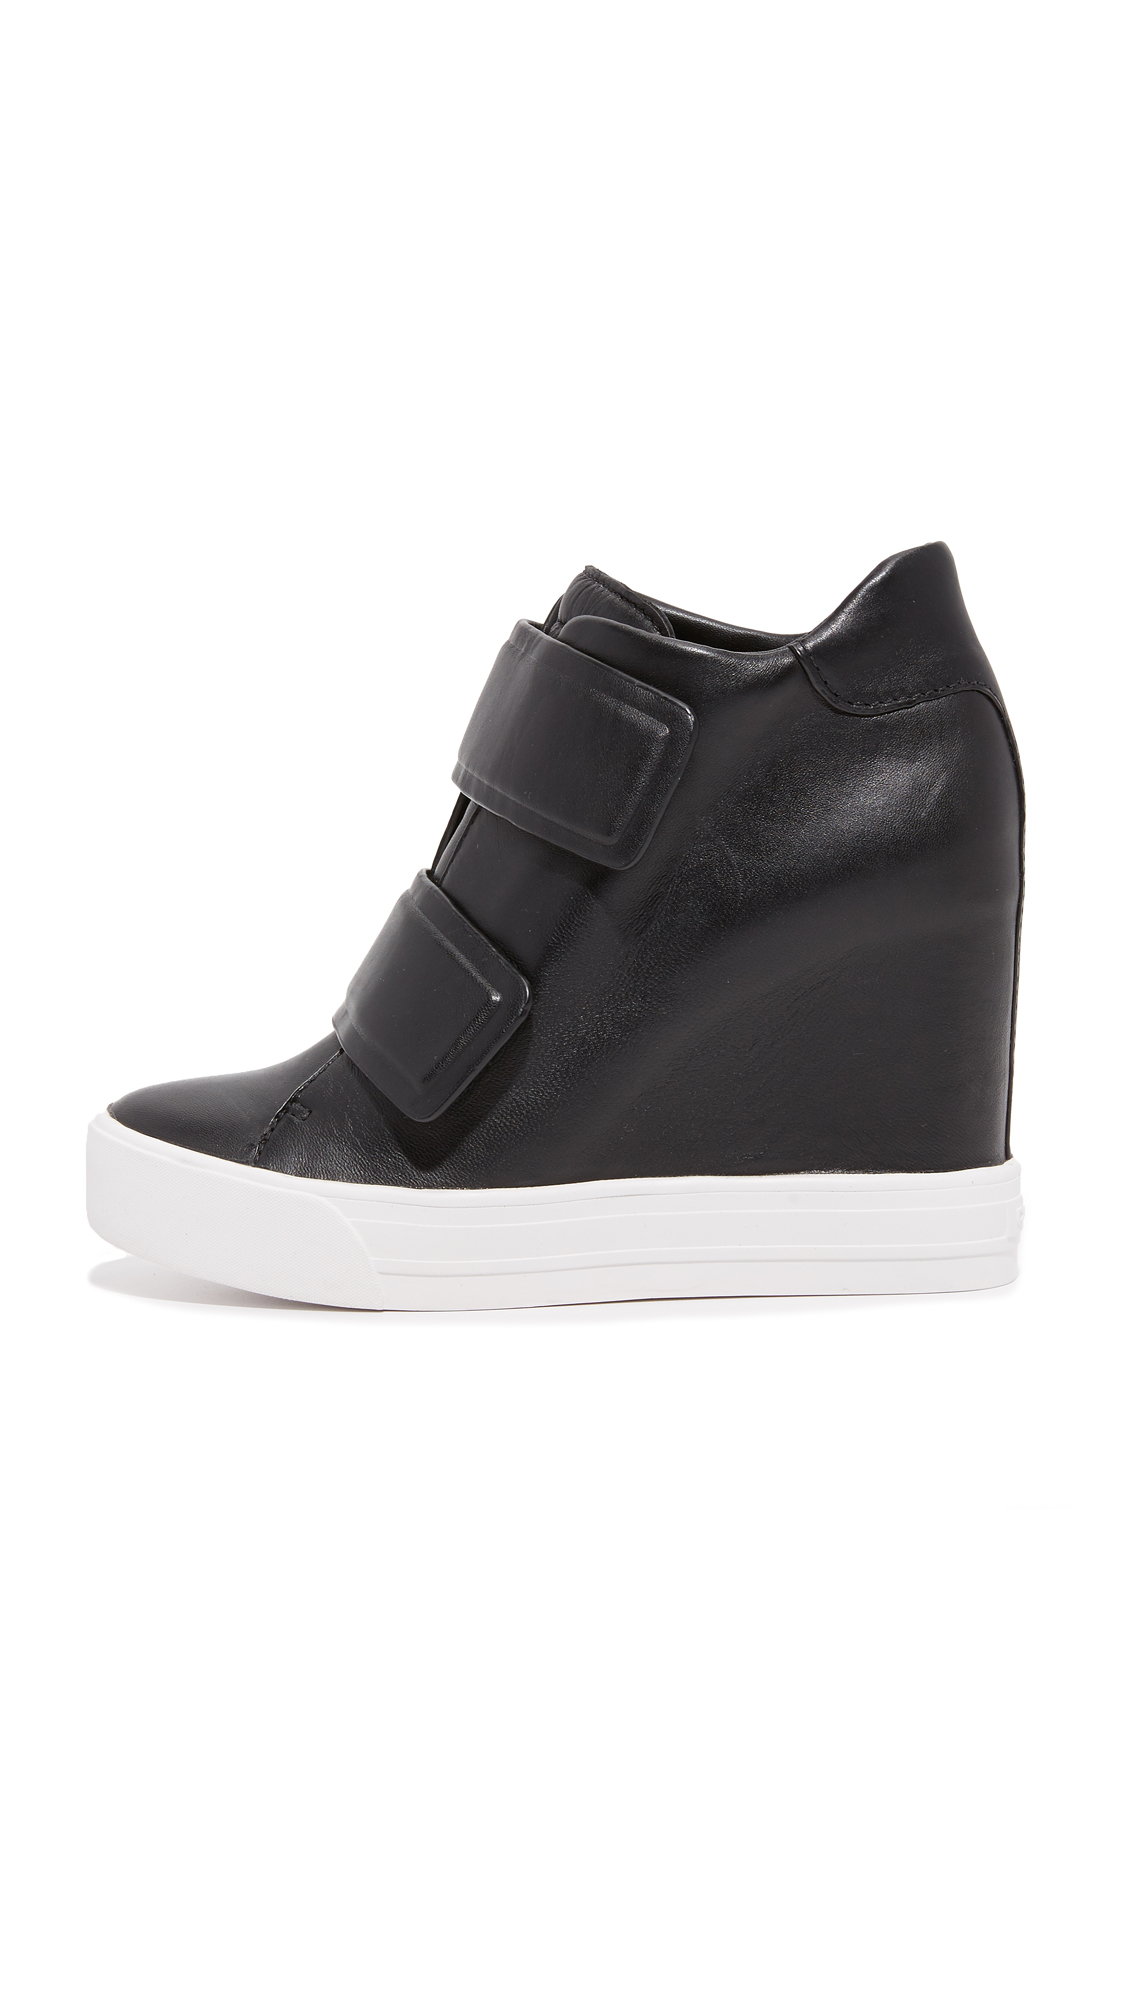 DKNY Grayson Wedge Sneakers in Black | Lyst